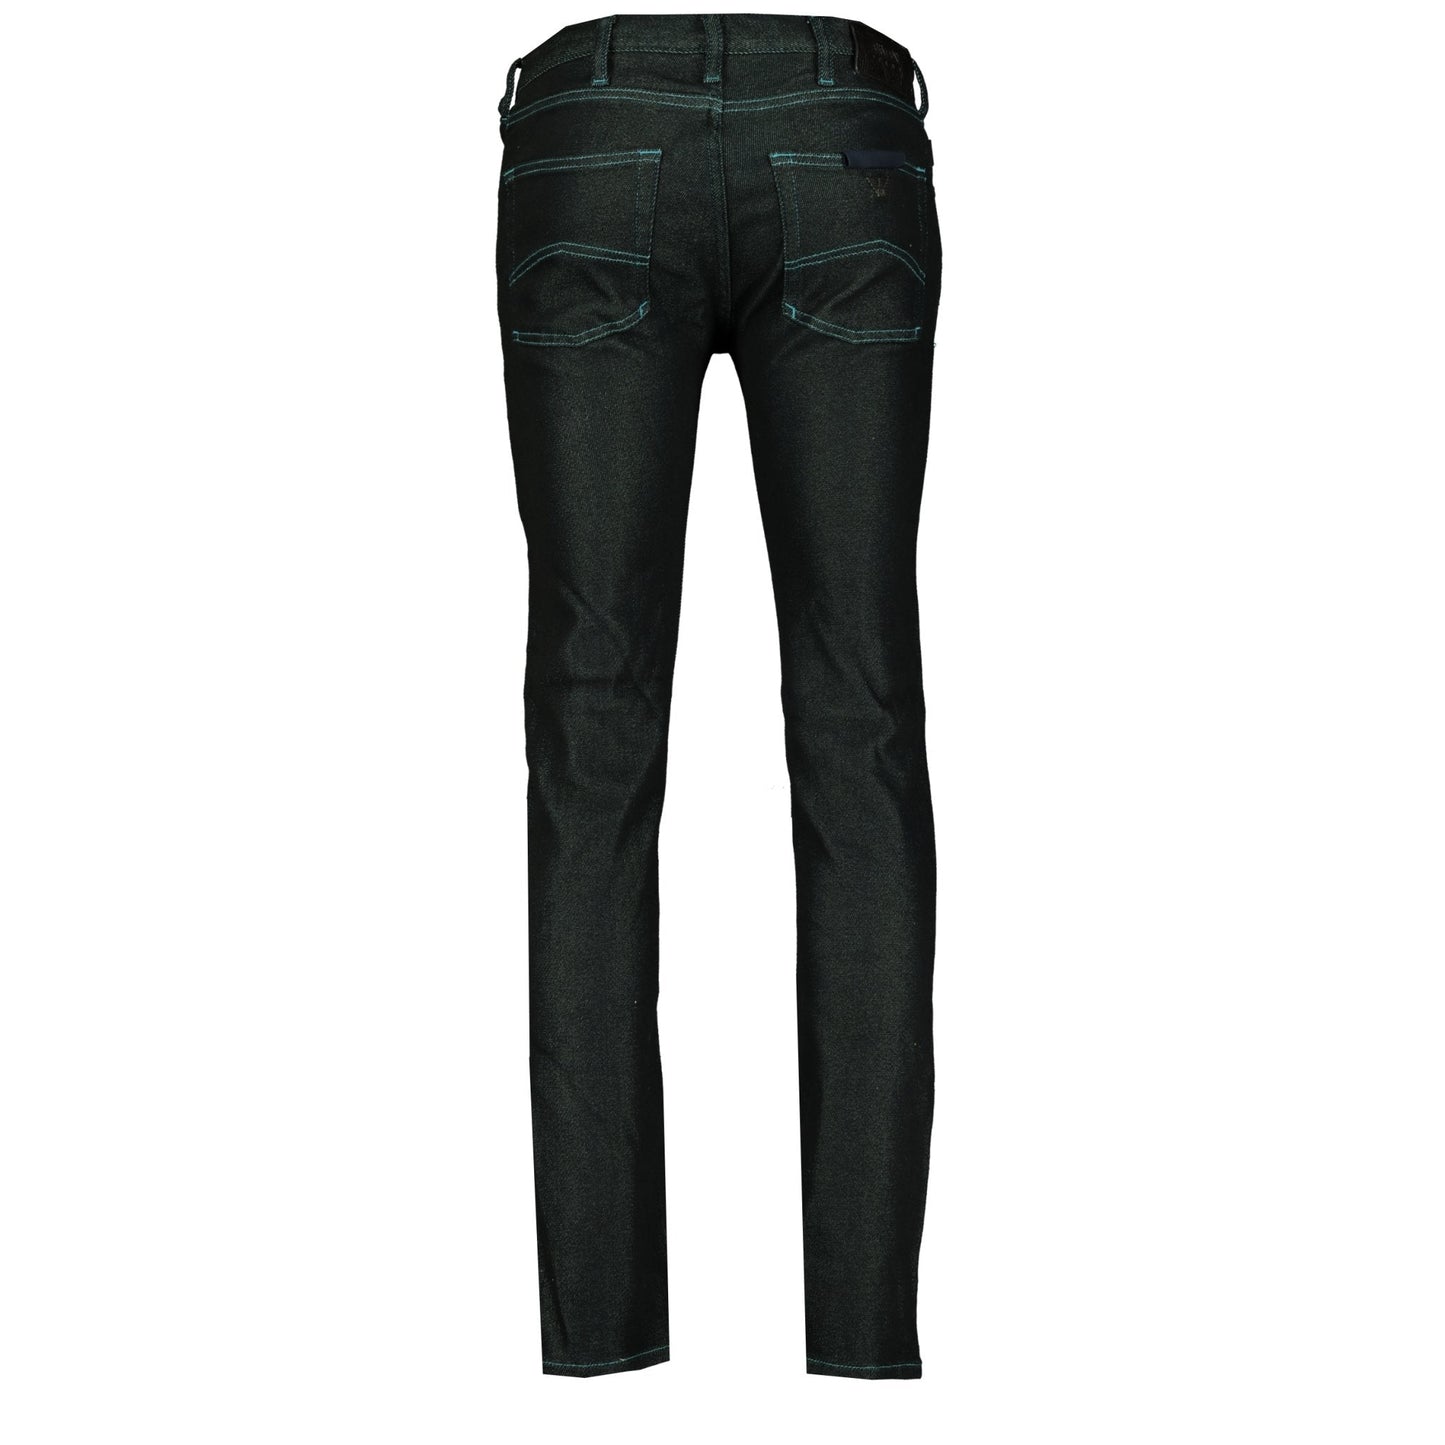 Armani Jeans J45 Slim Fit Dark Jeans - LinkFashionco